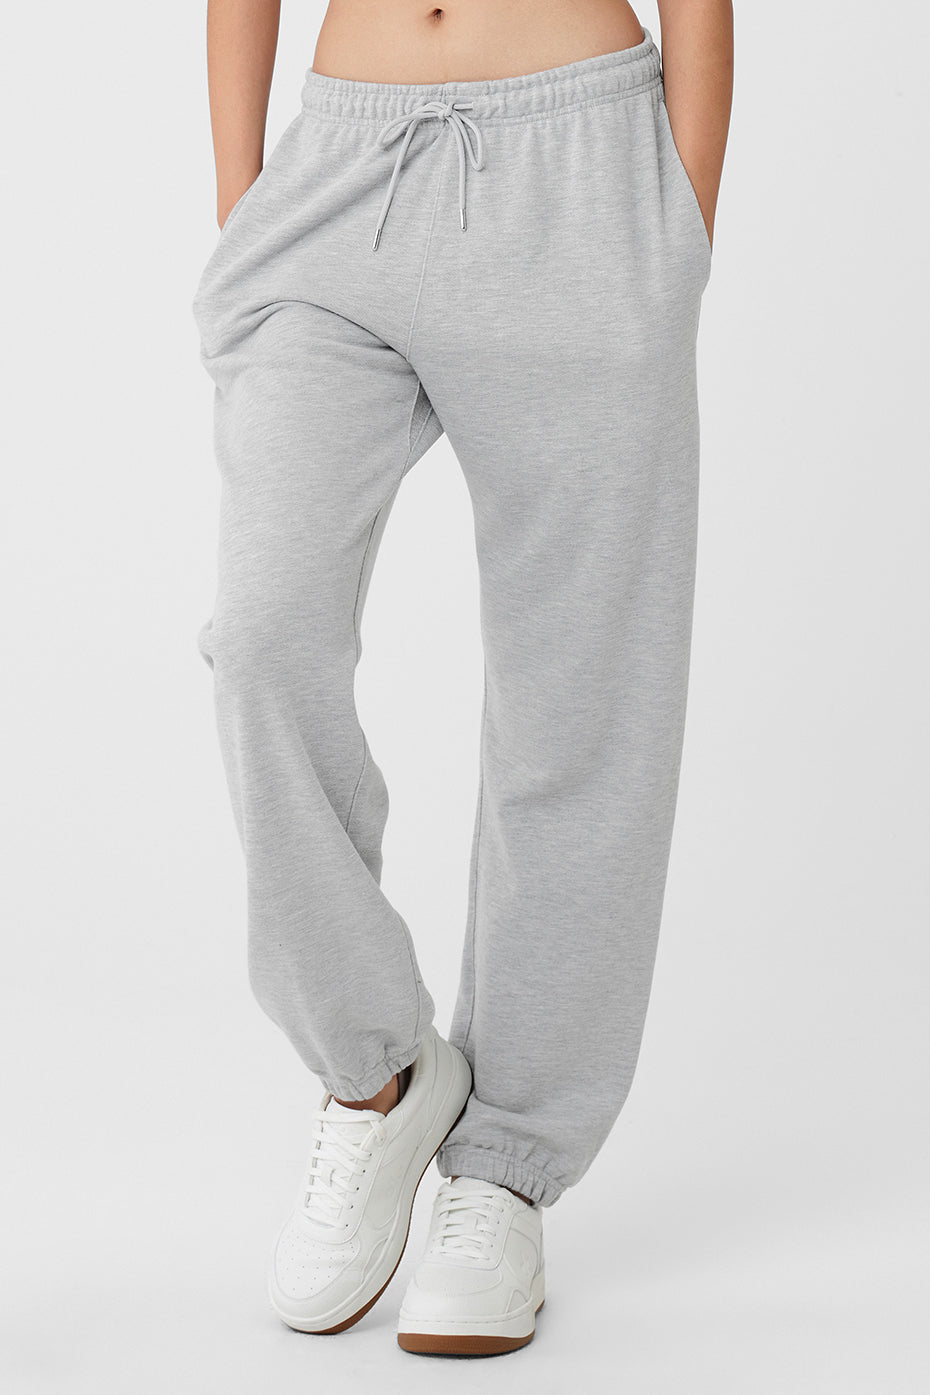 ALO Yoga, Pants & Jumpsuits, Alo Yoga Muse Sweatpants Raspberry Sorbet  Size Large